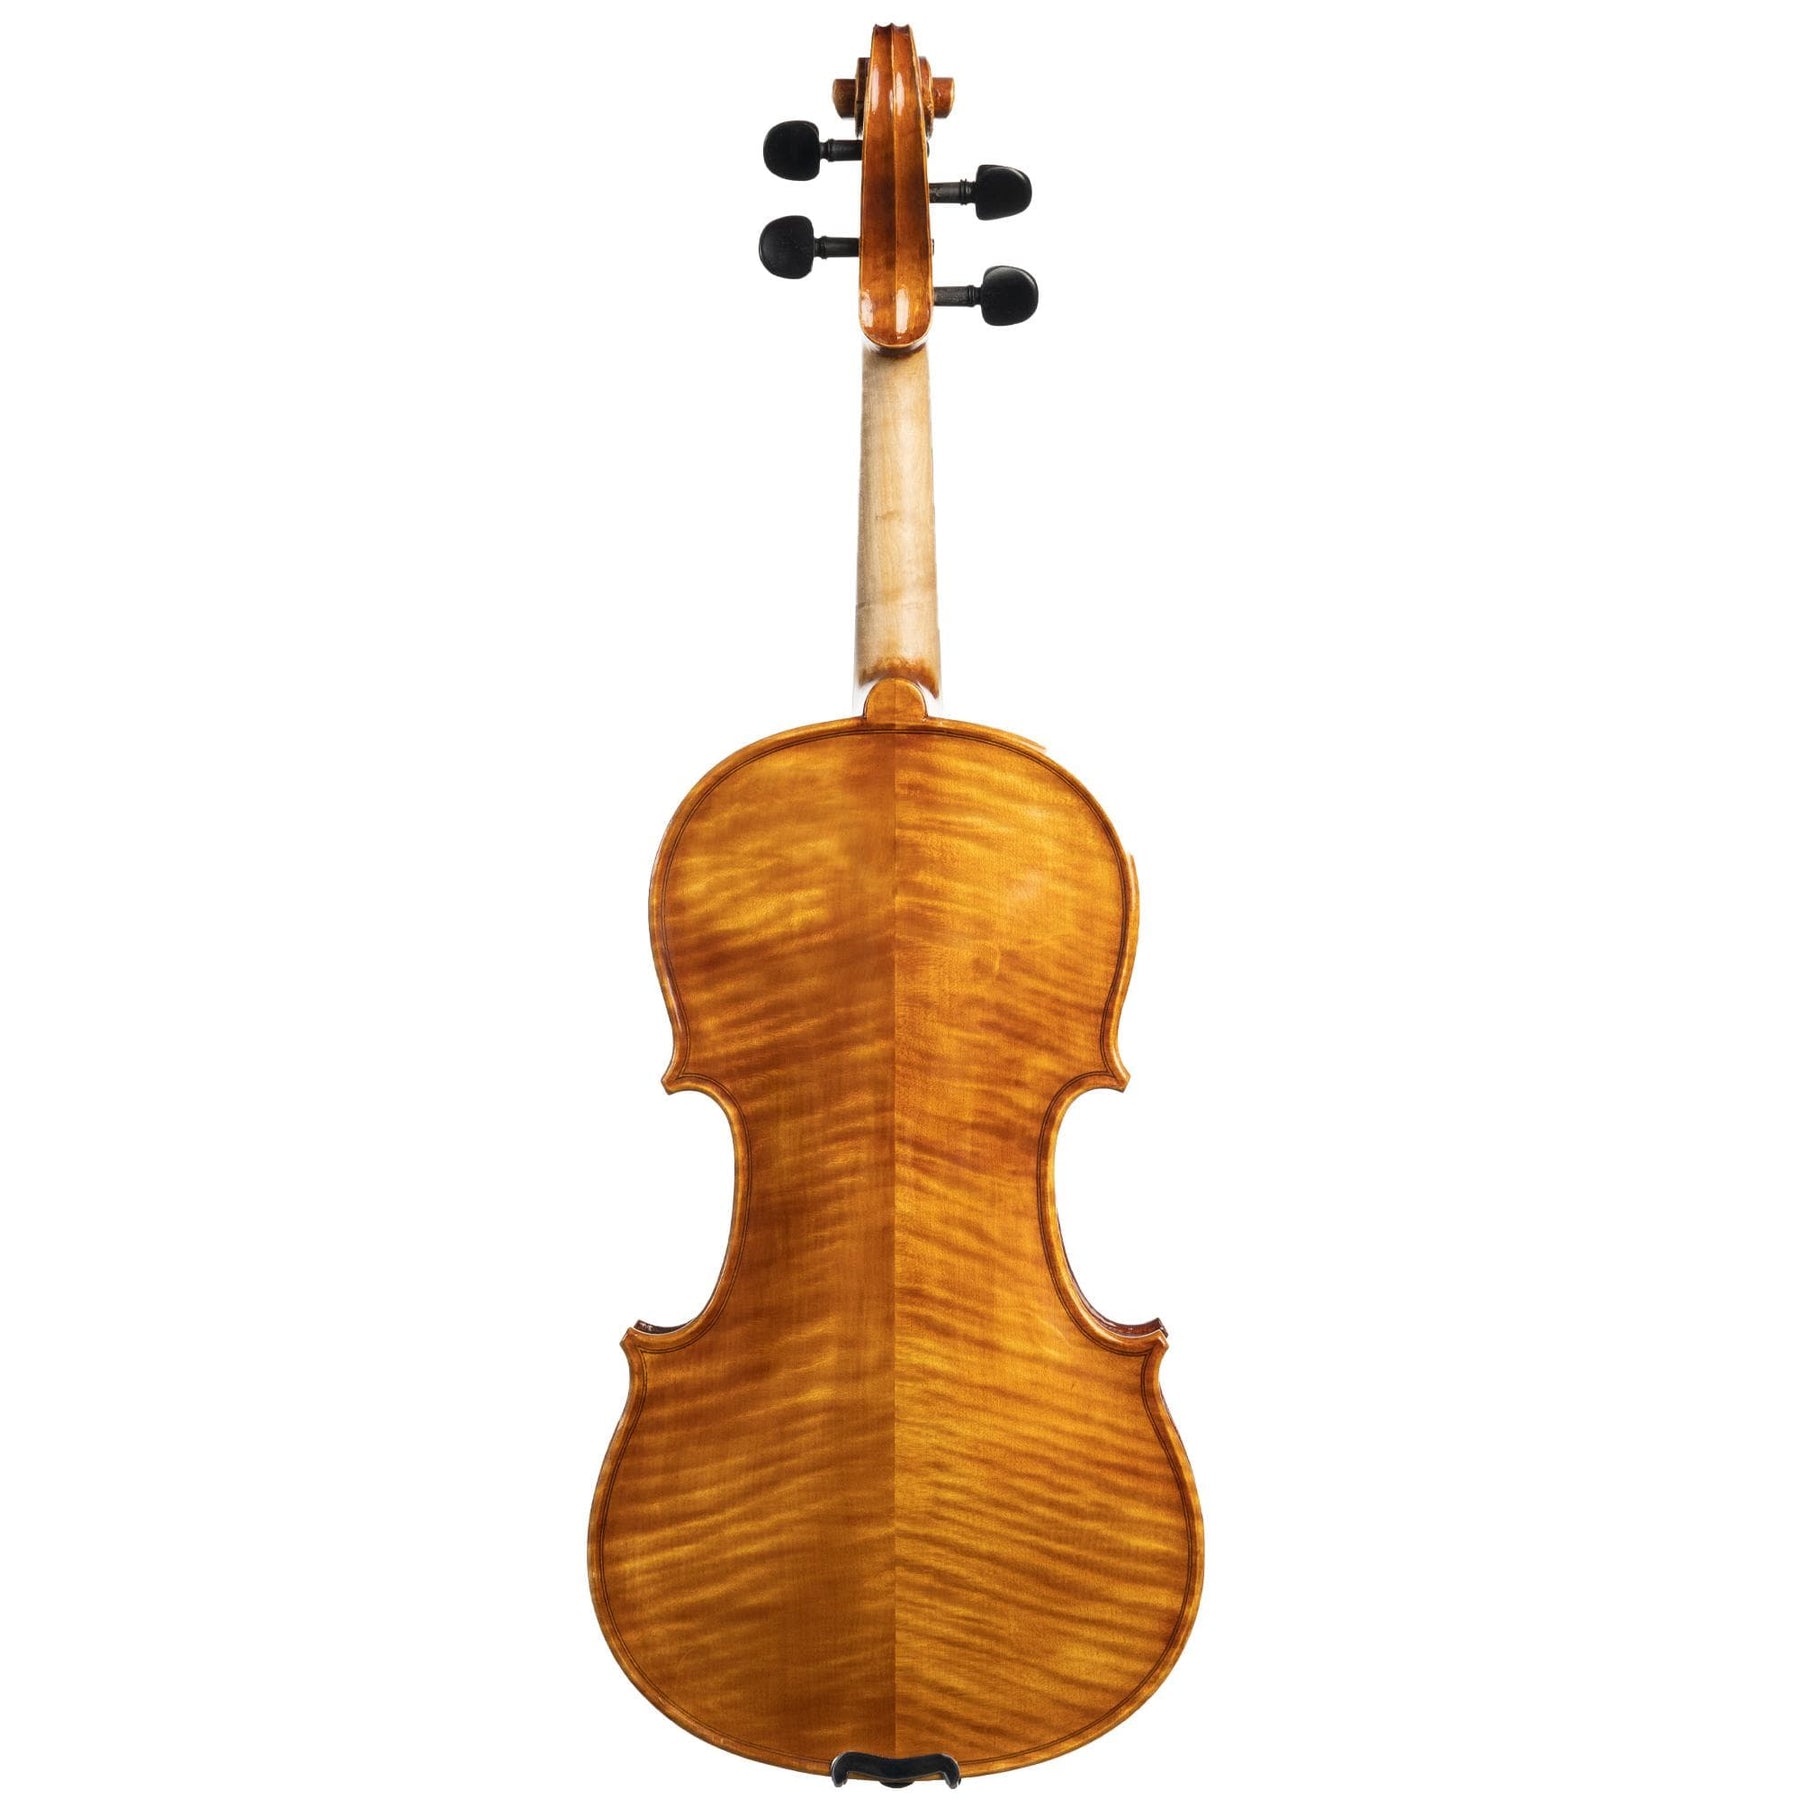 William Belote Workshop Violin, Ann Arbor, 2020